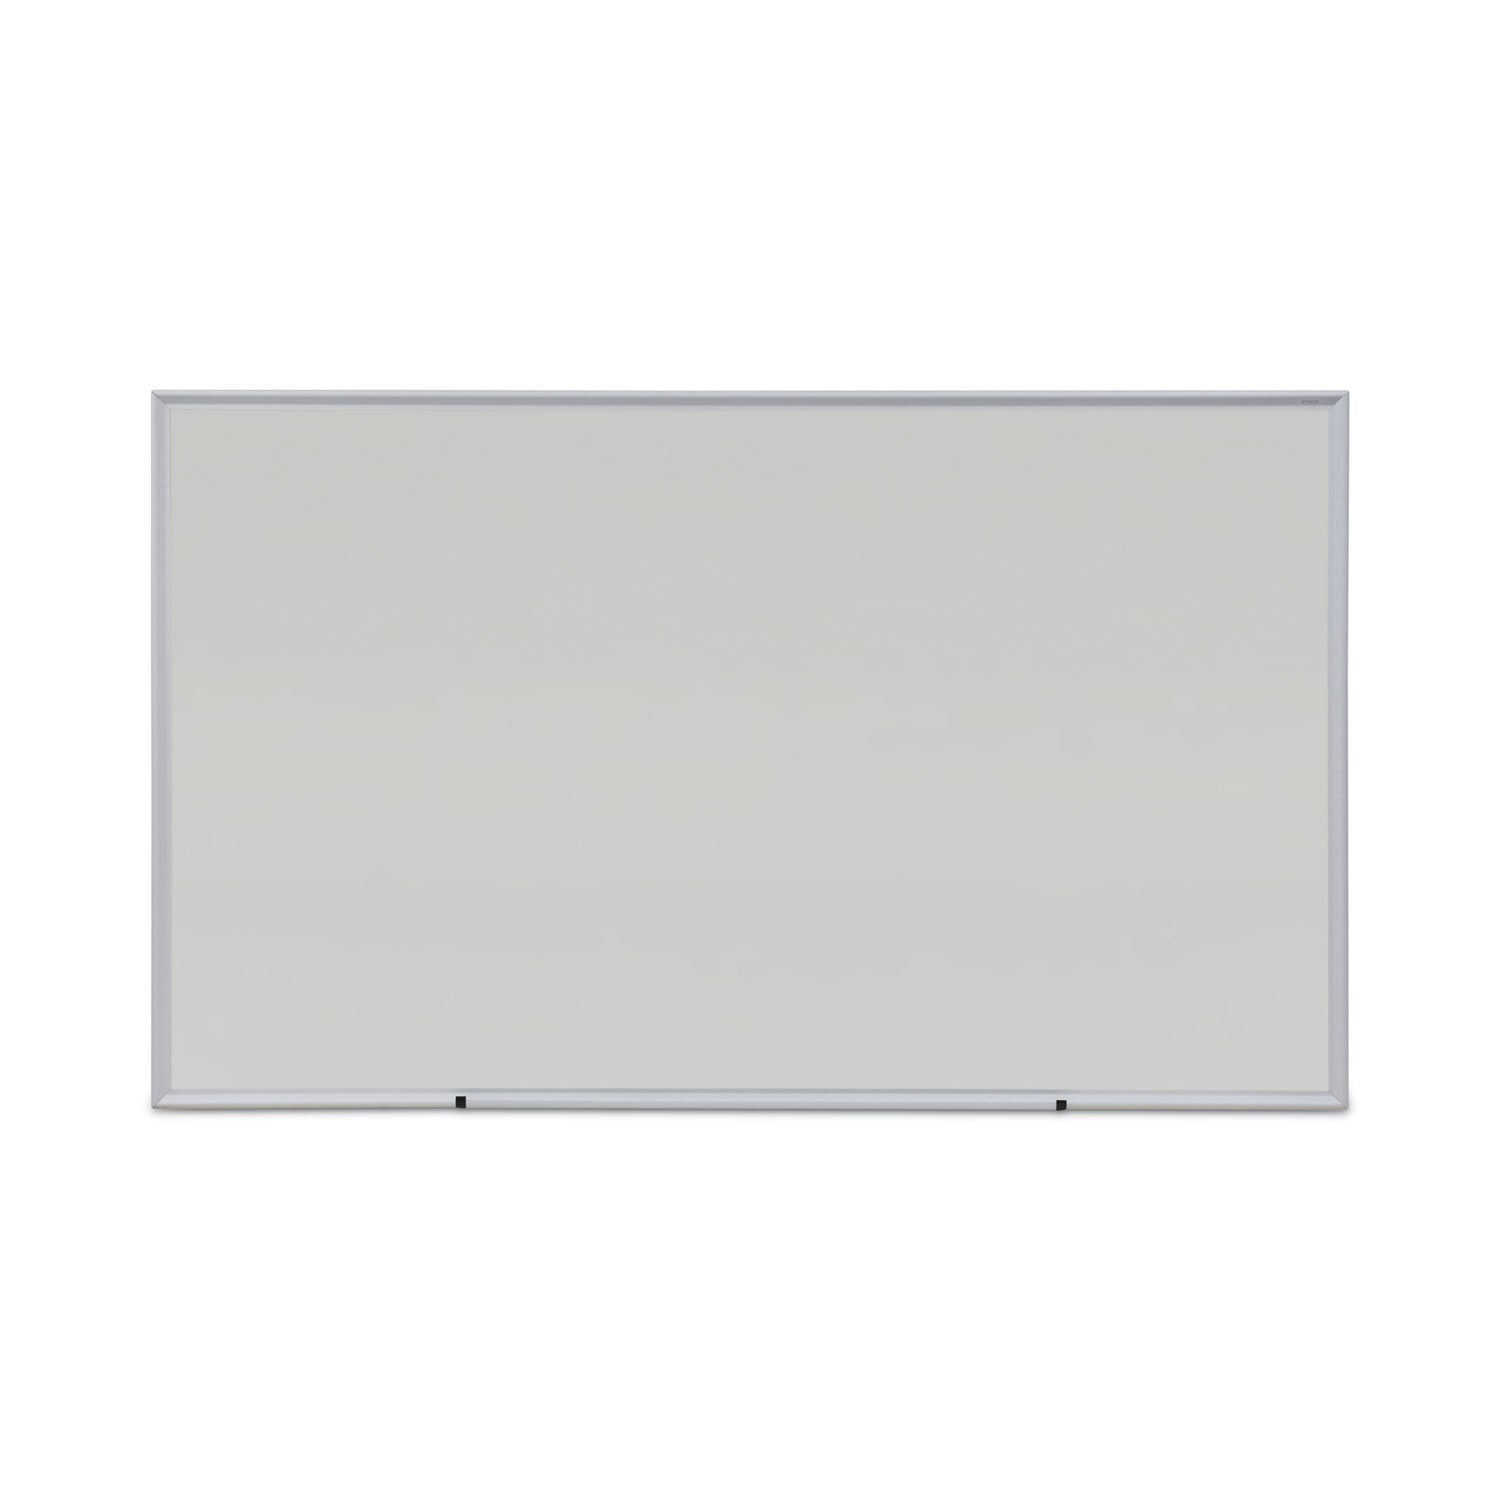 Deluxe Melamine Dry Erase Board, 60 x 36, Melamine White Surface, Silver Anodized Aluminum Frame - 